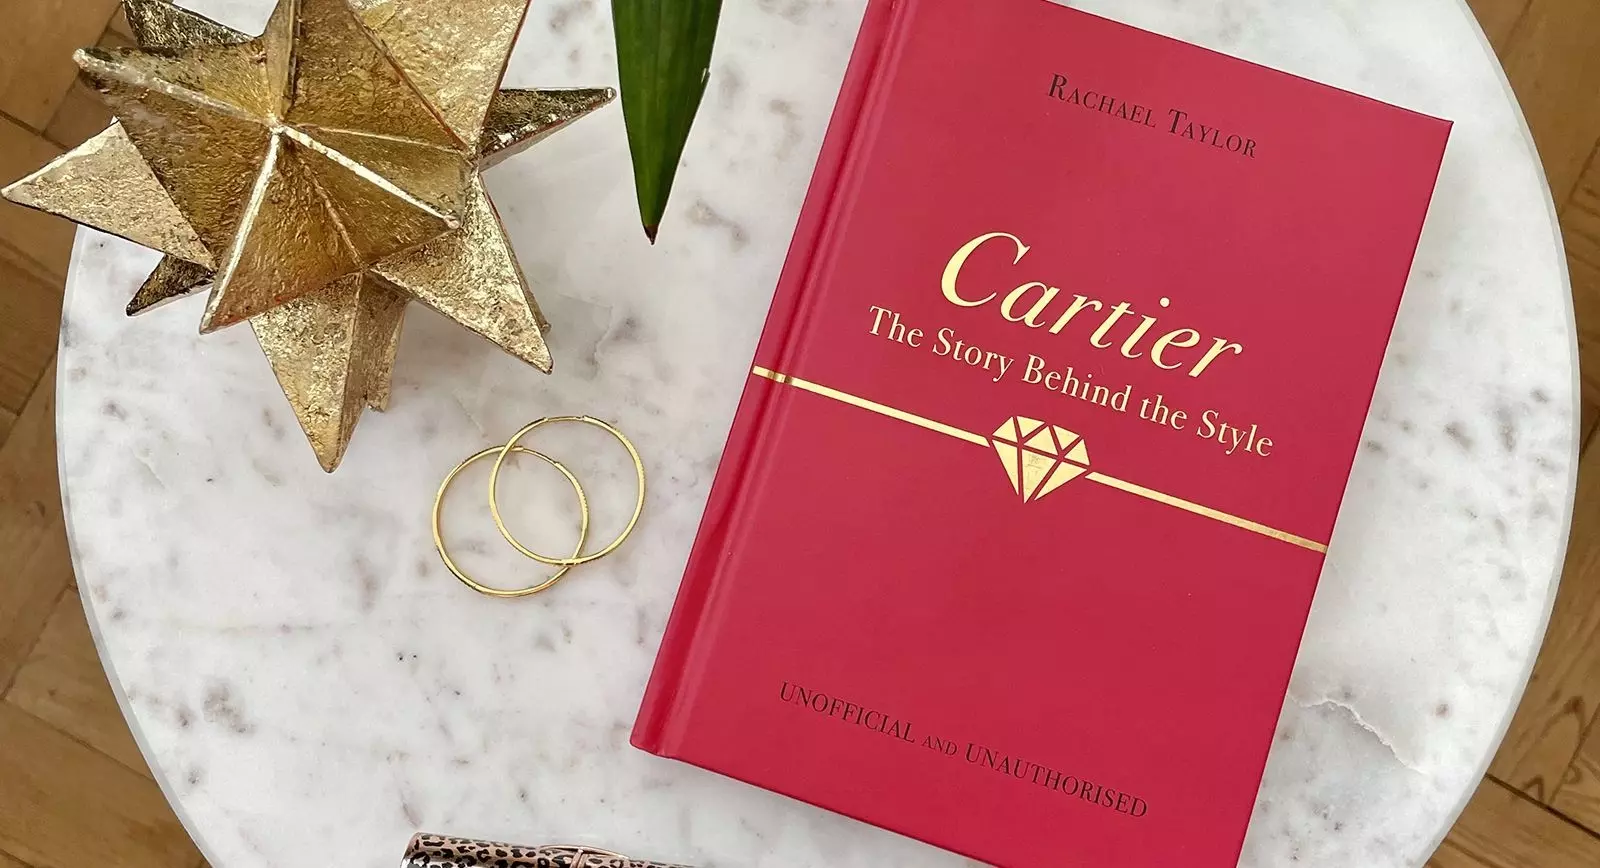 Cartier book by Rachael Taylor